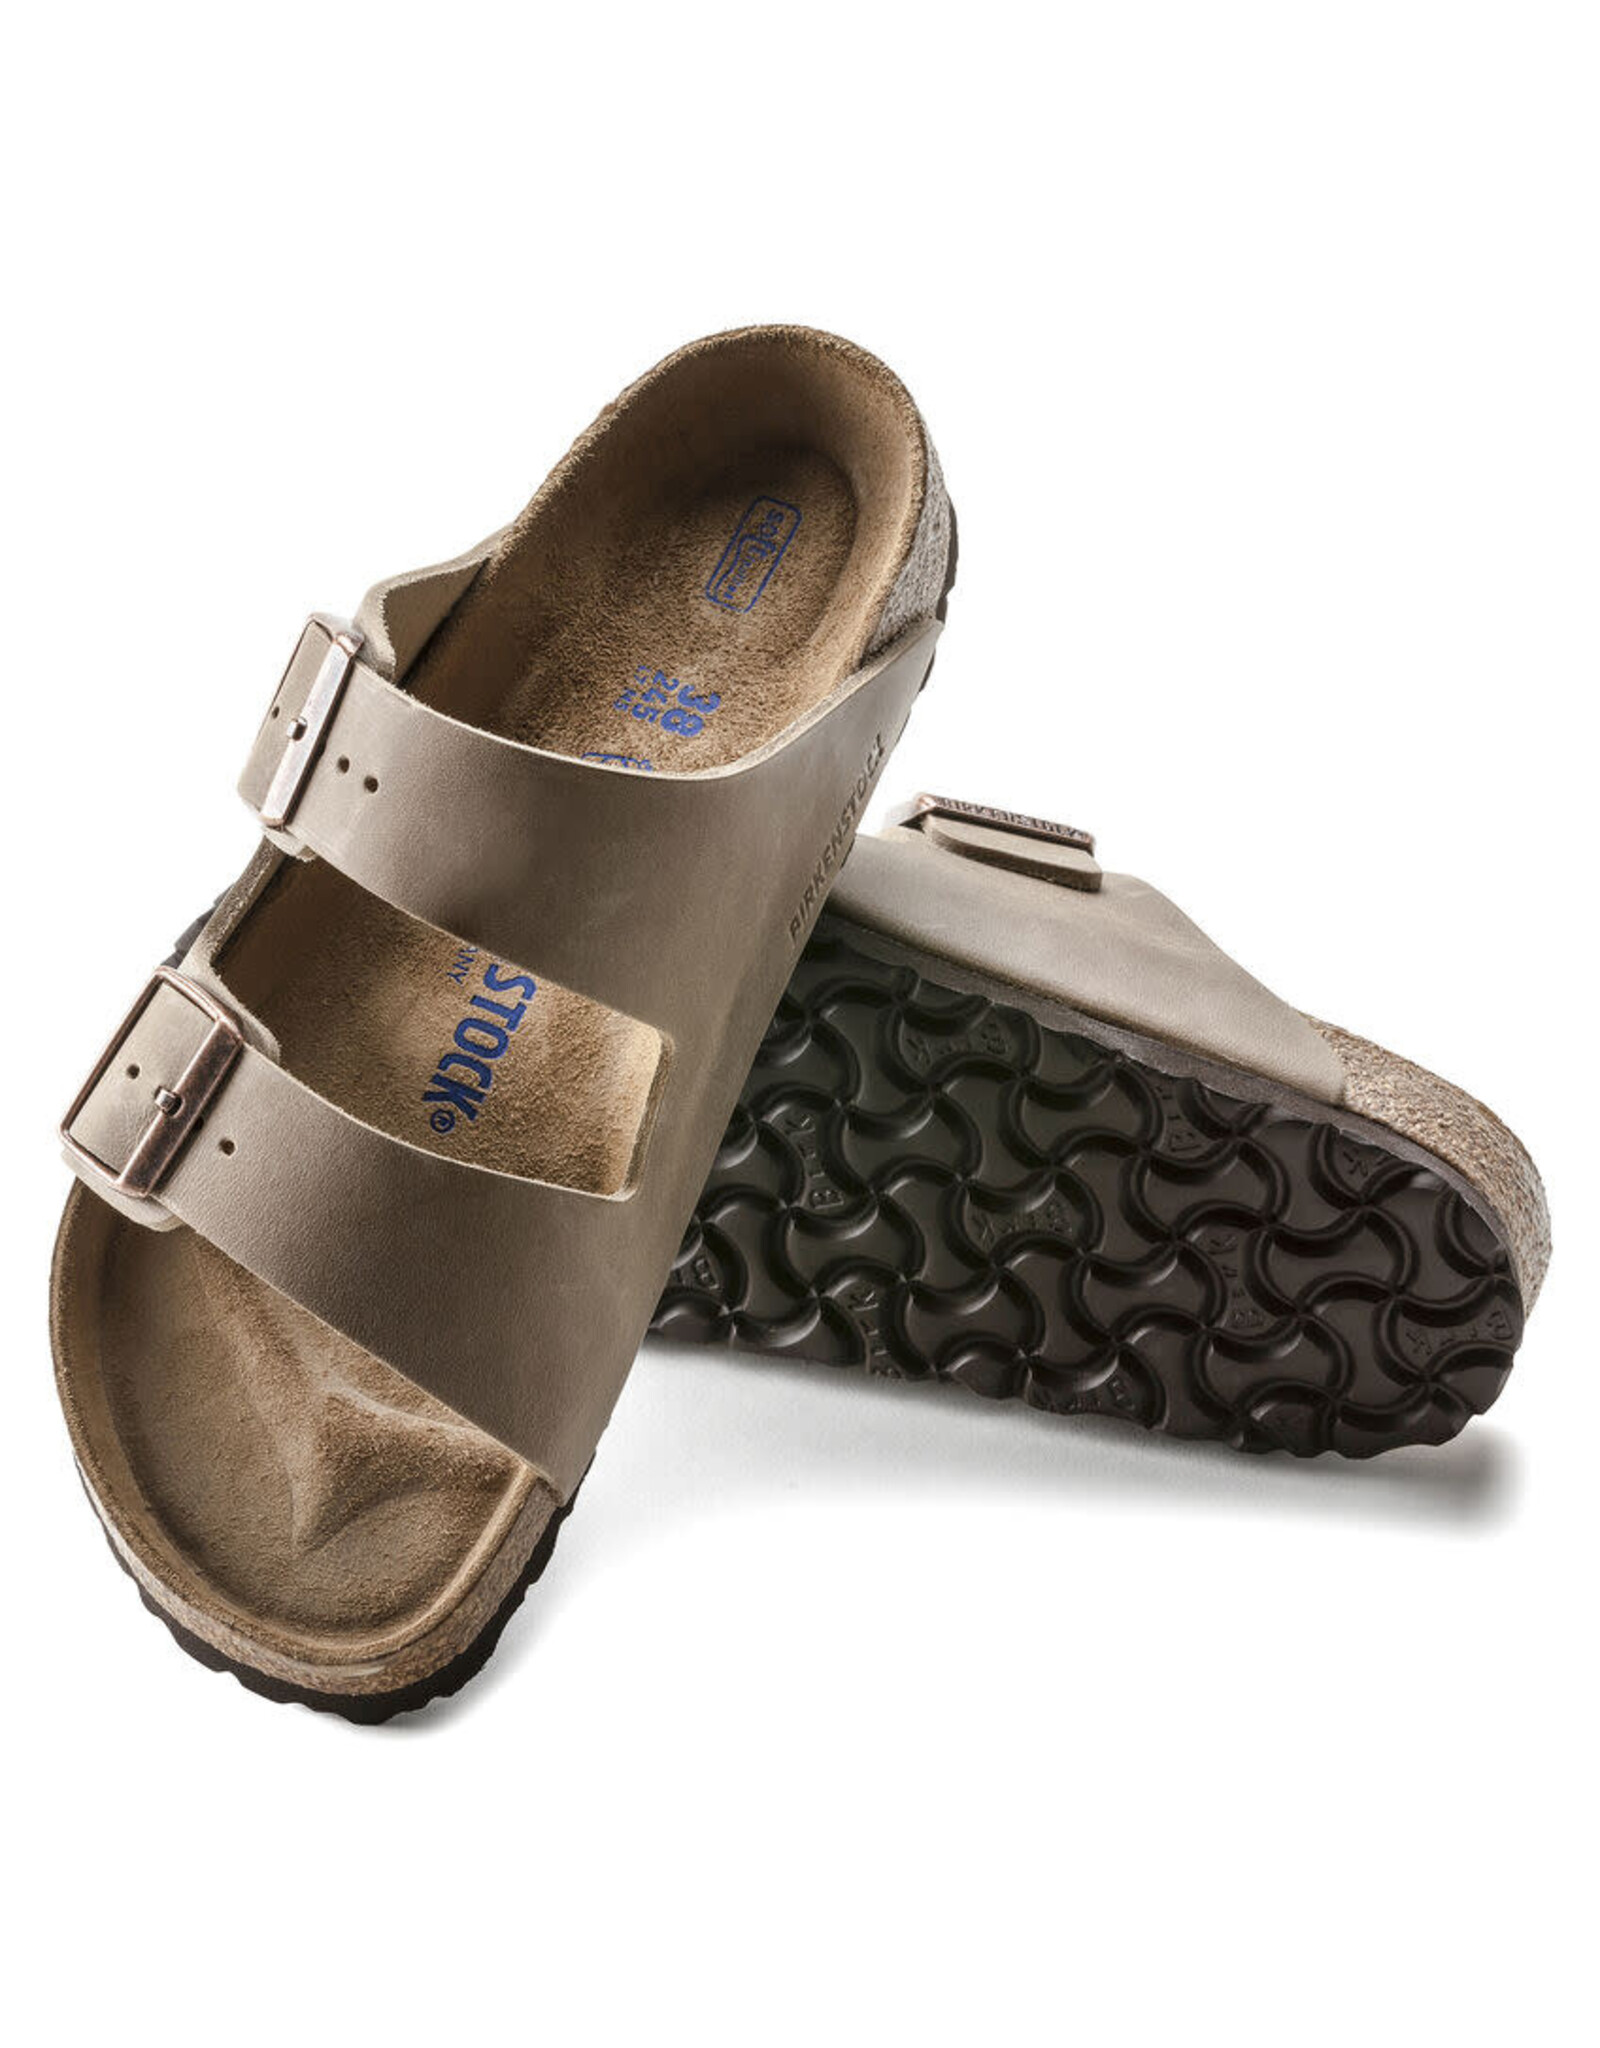 Birkenstock Arizona Oiled Leather Sandal Soft Footbed